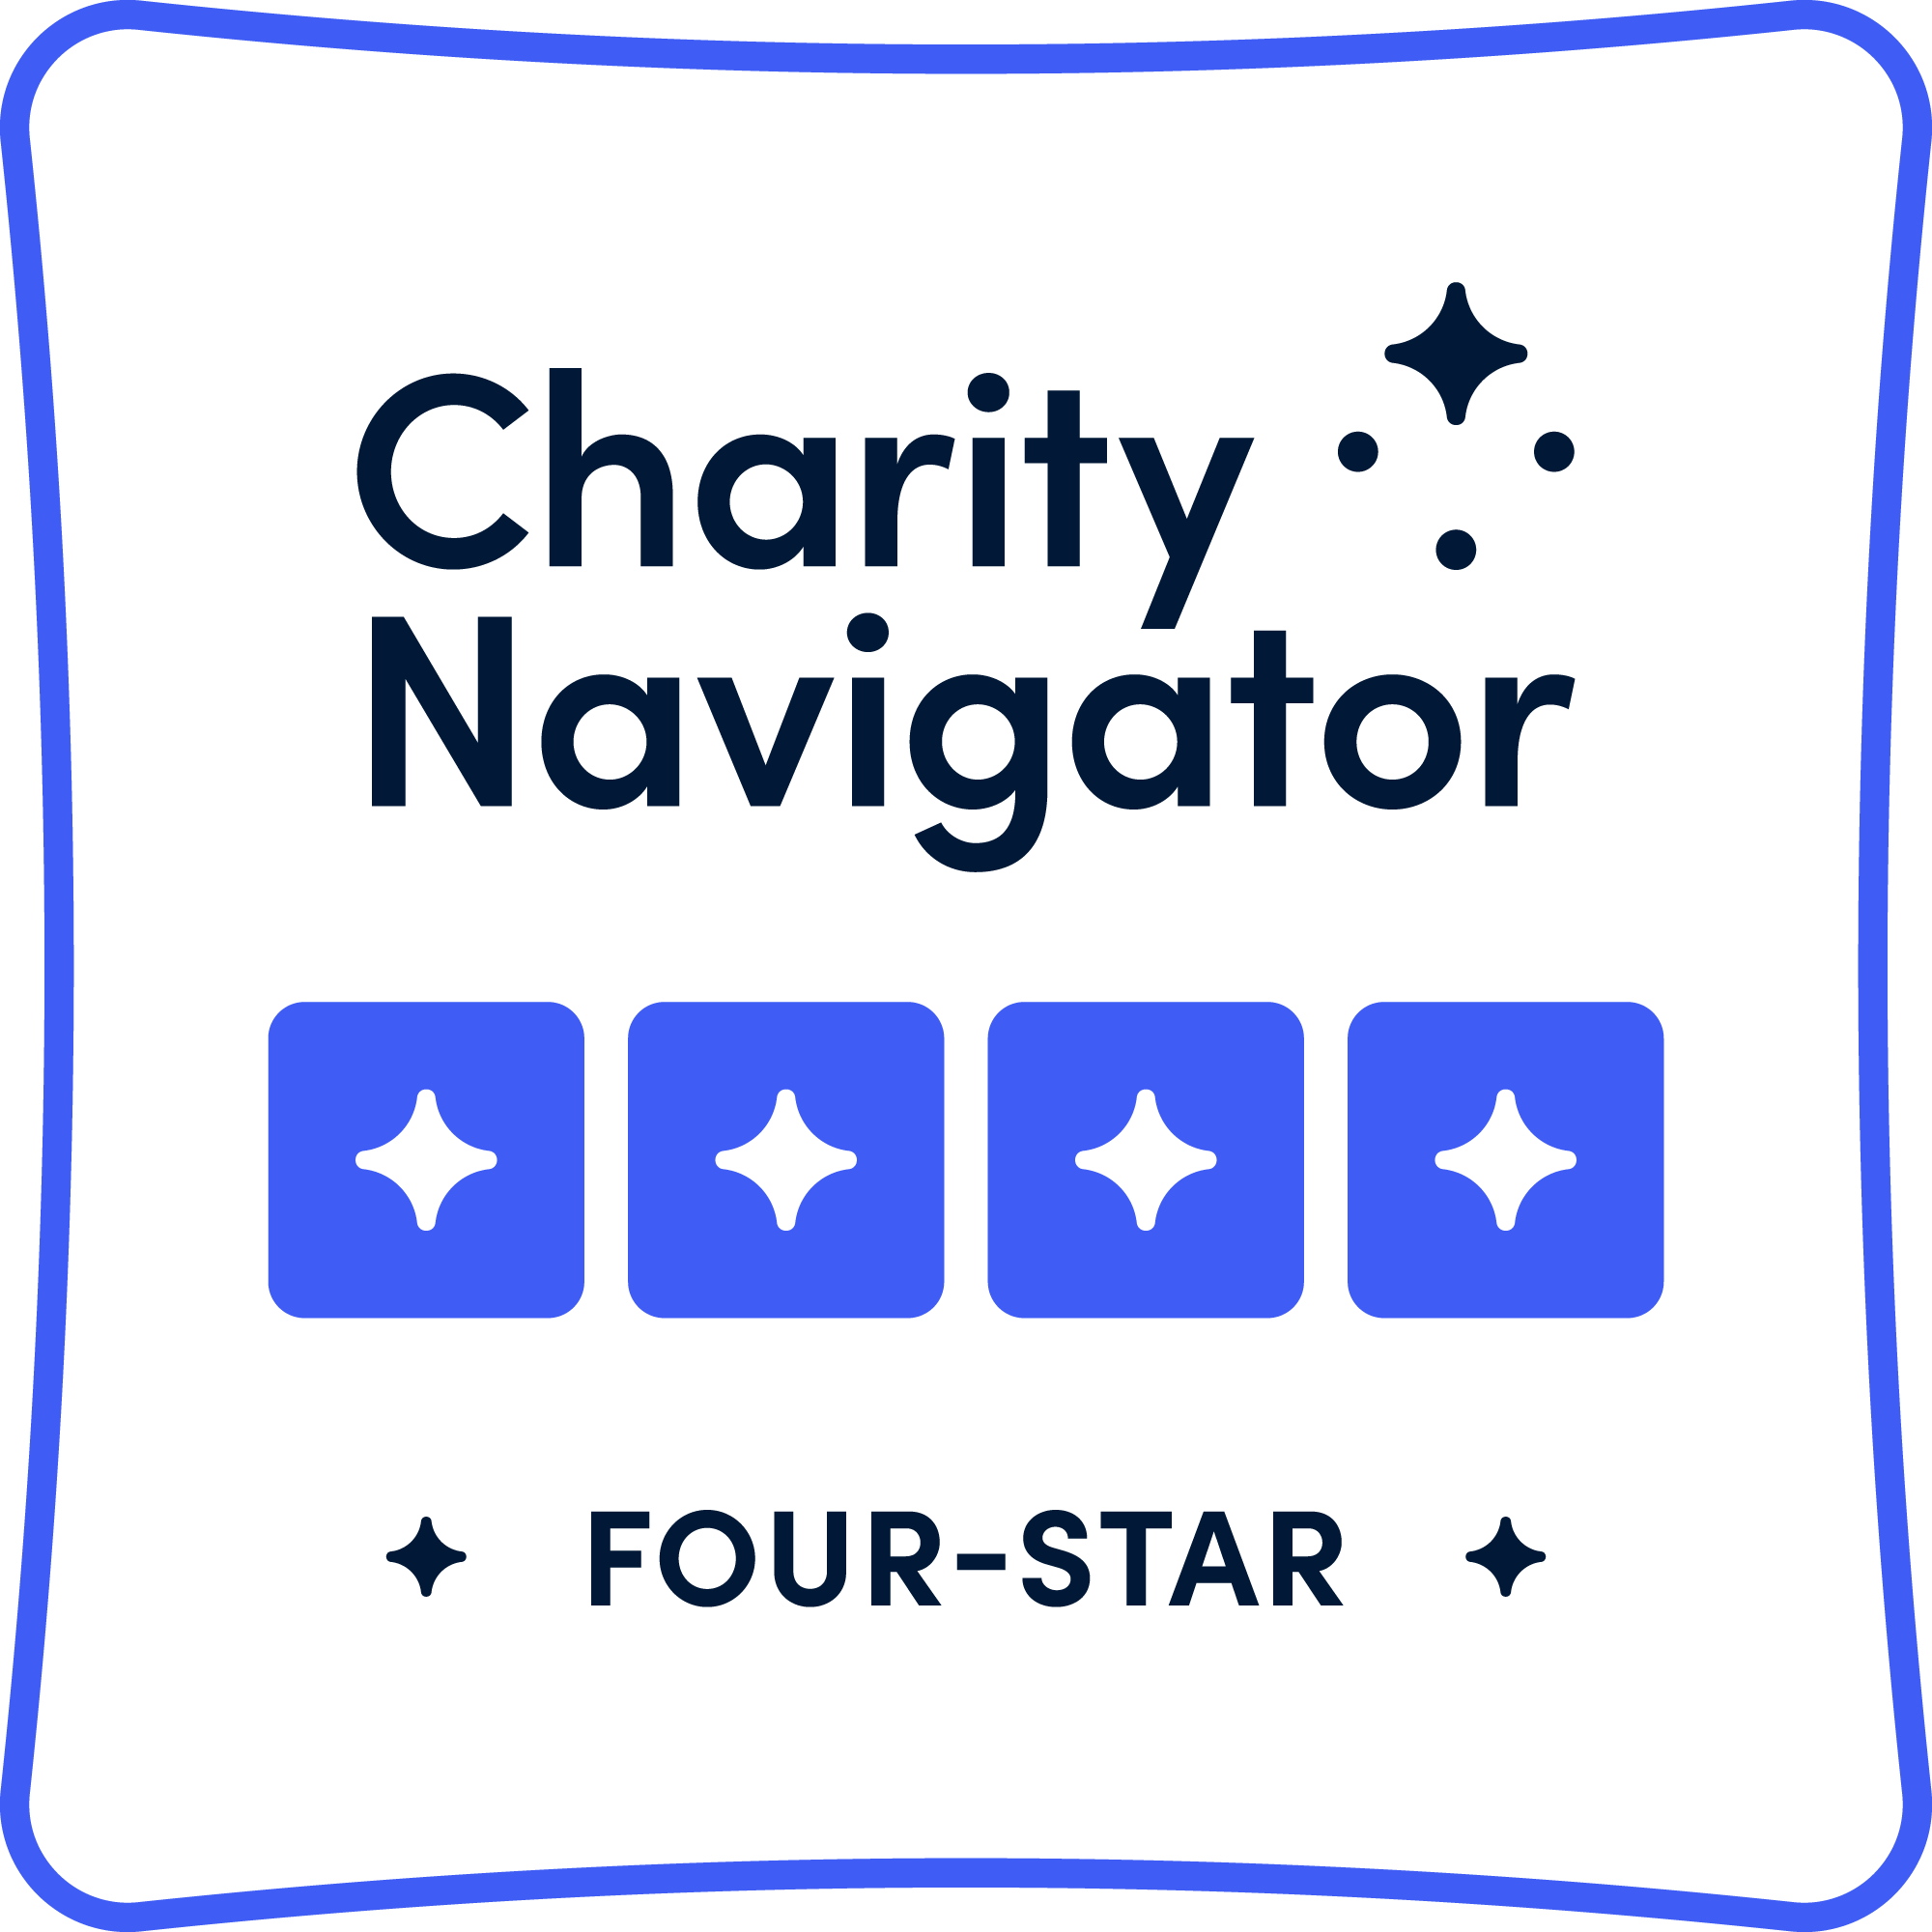 Charity Navagator